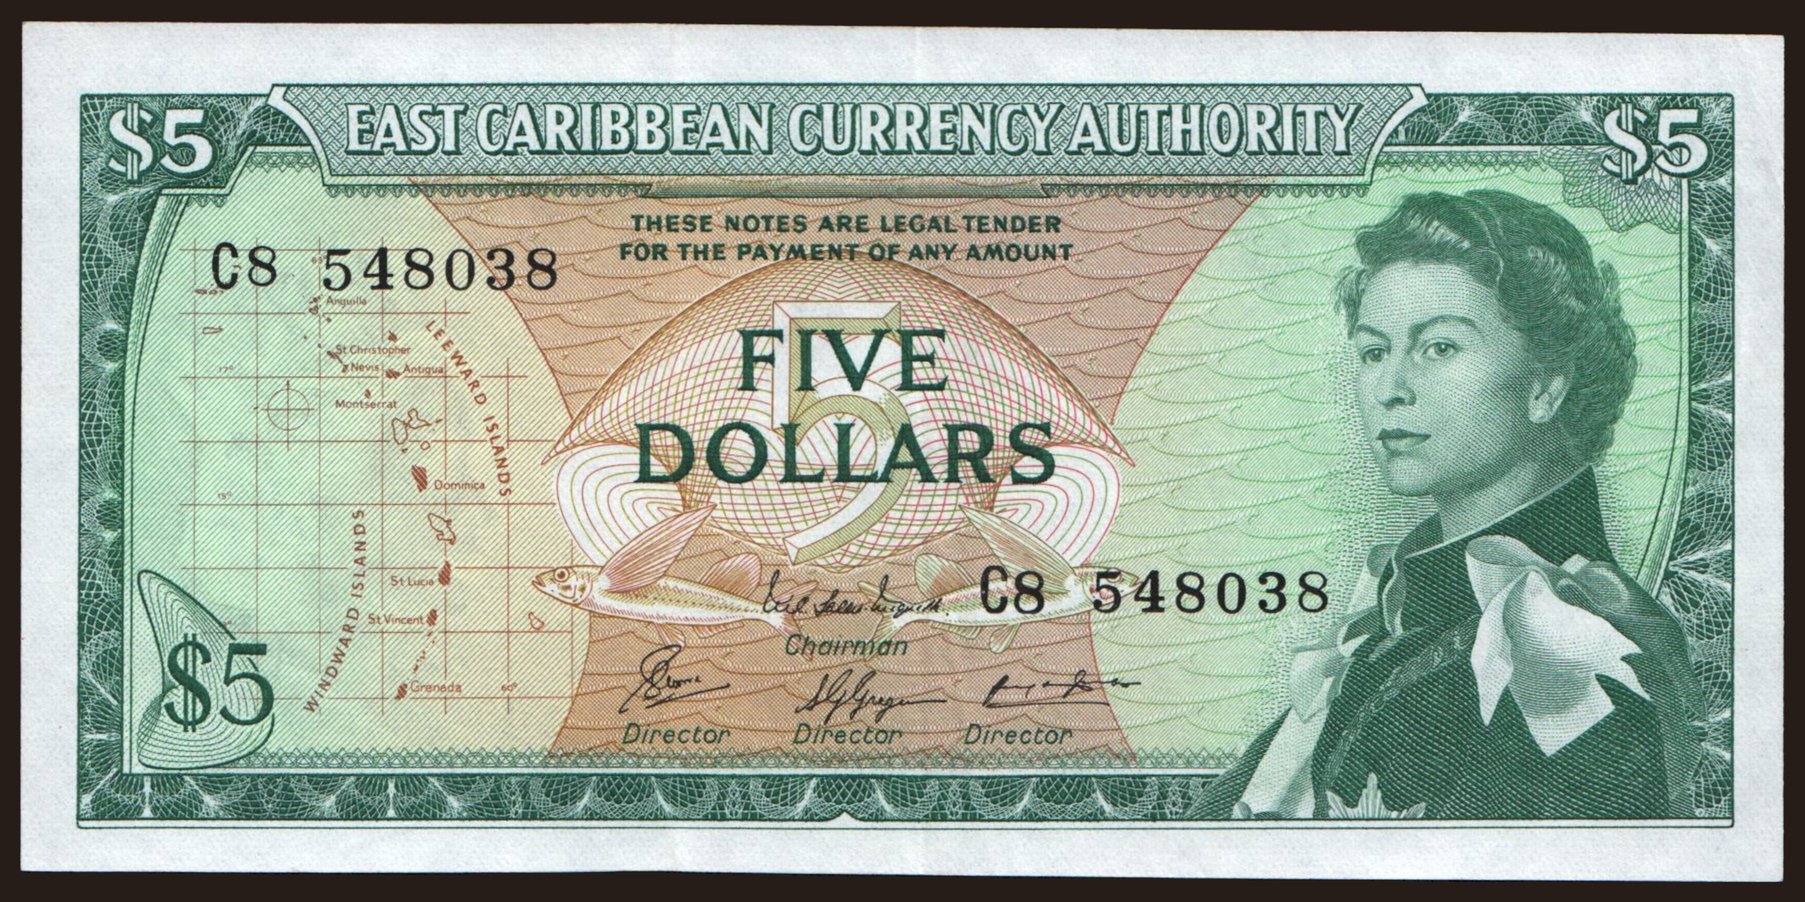 5 dollars, 1965